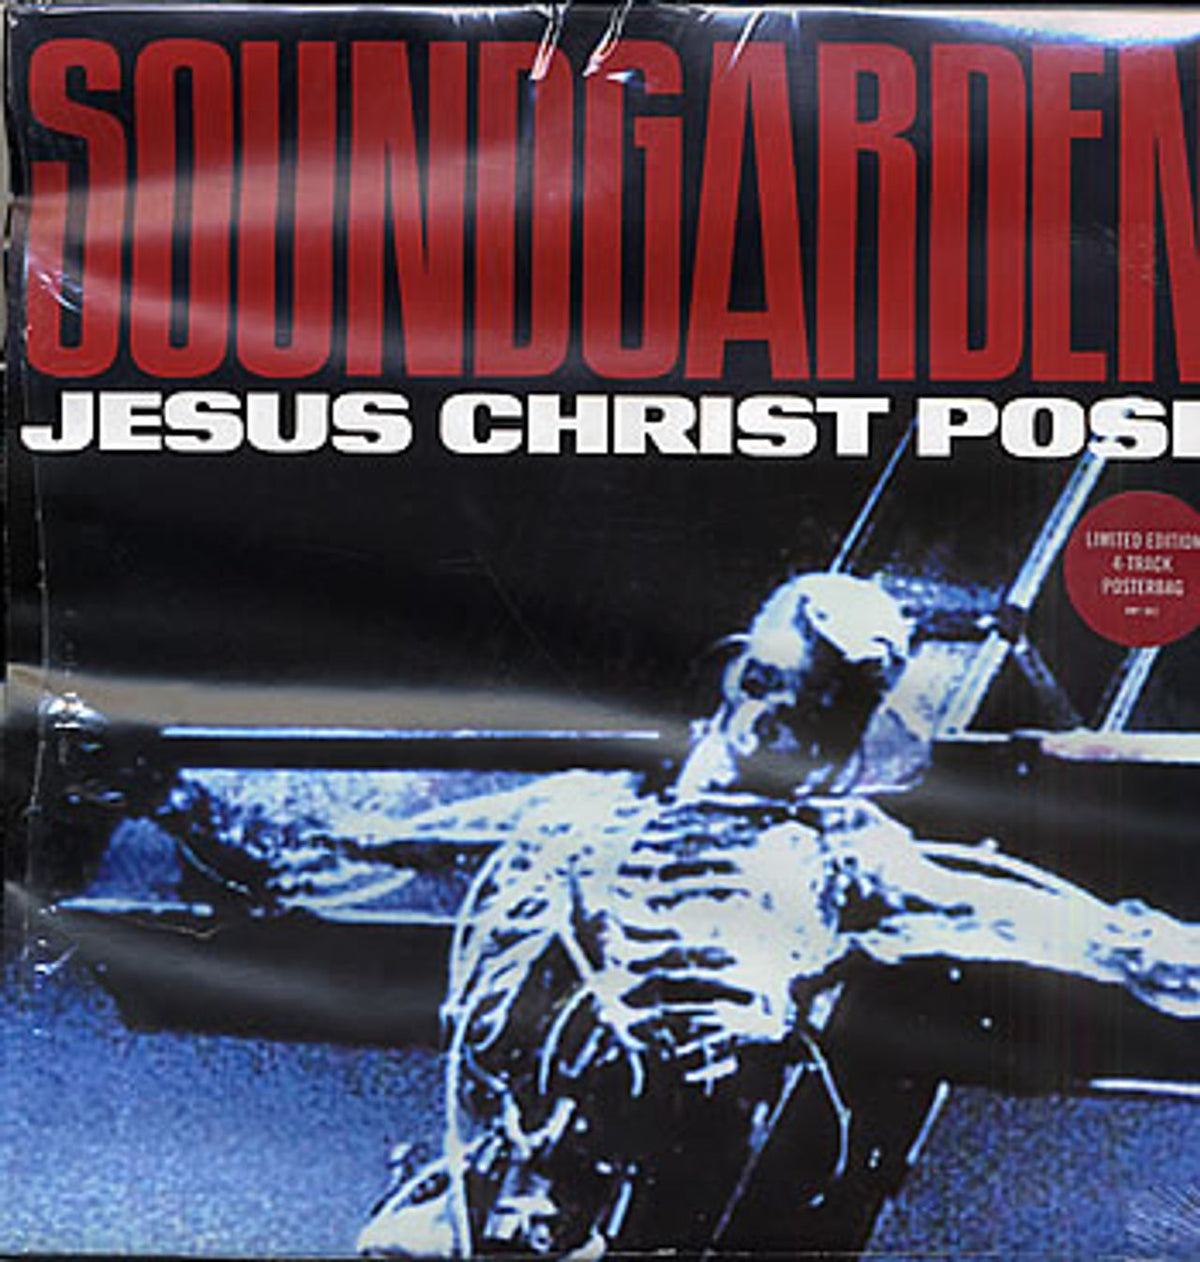 soundgarden jesus christ pose poster sleeve sealed uk 12 inch vinyl single maxi amy862